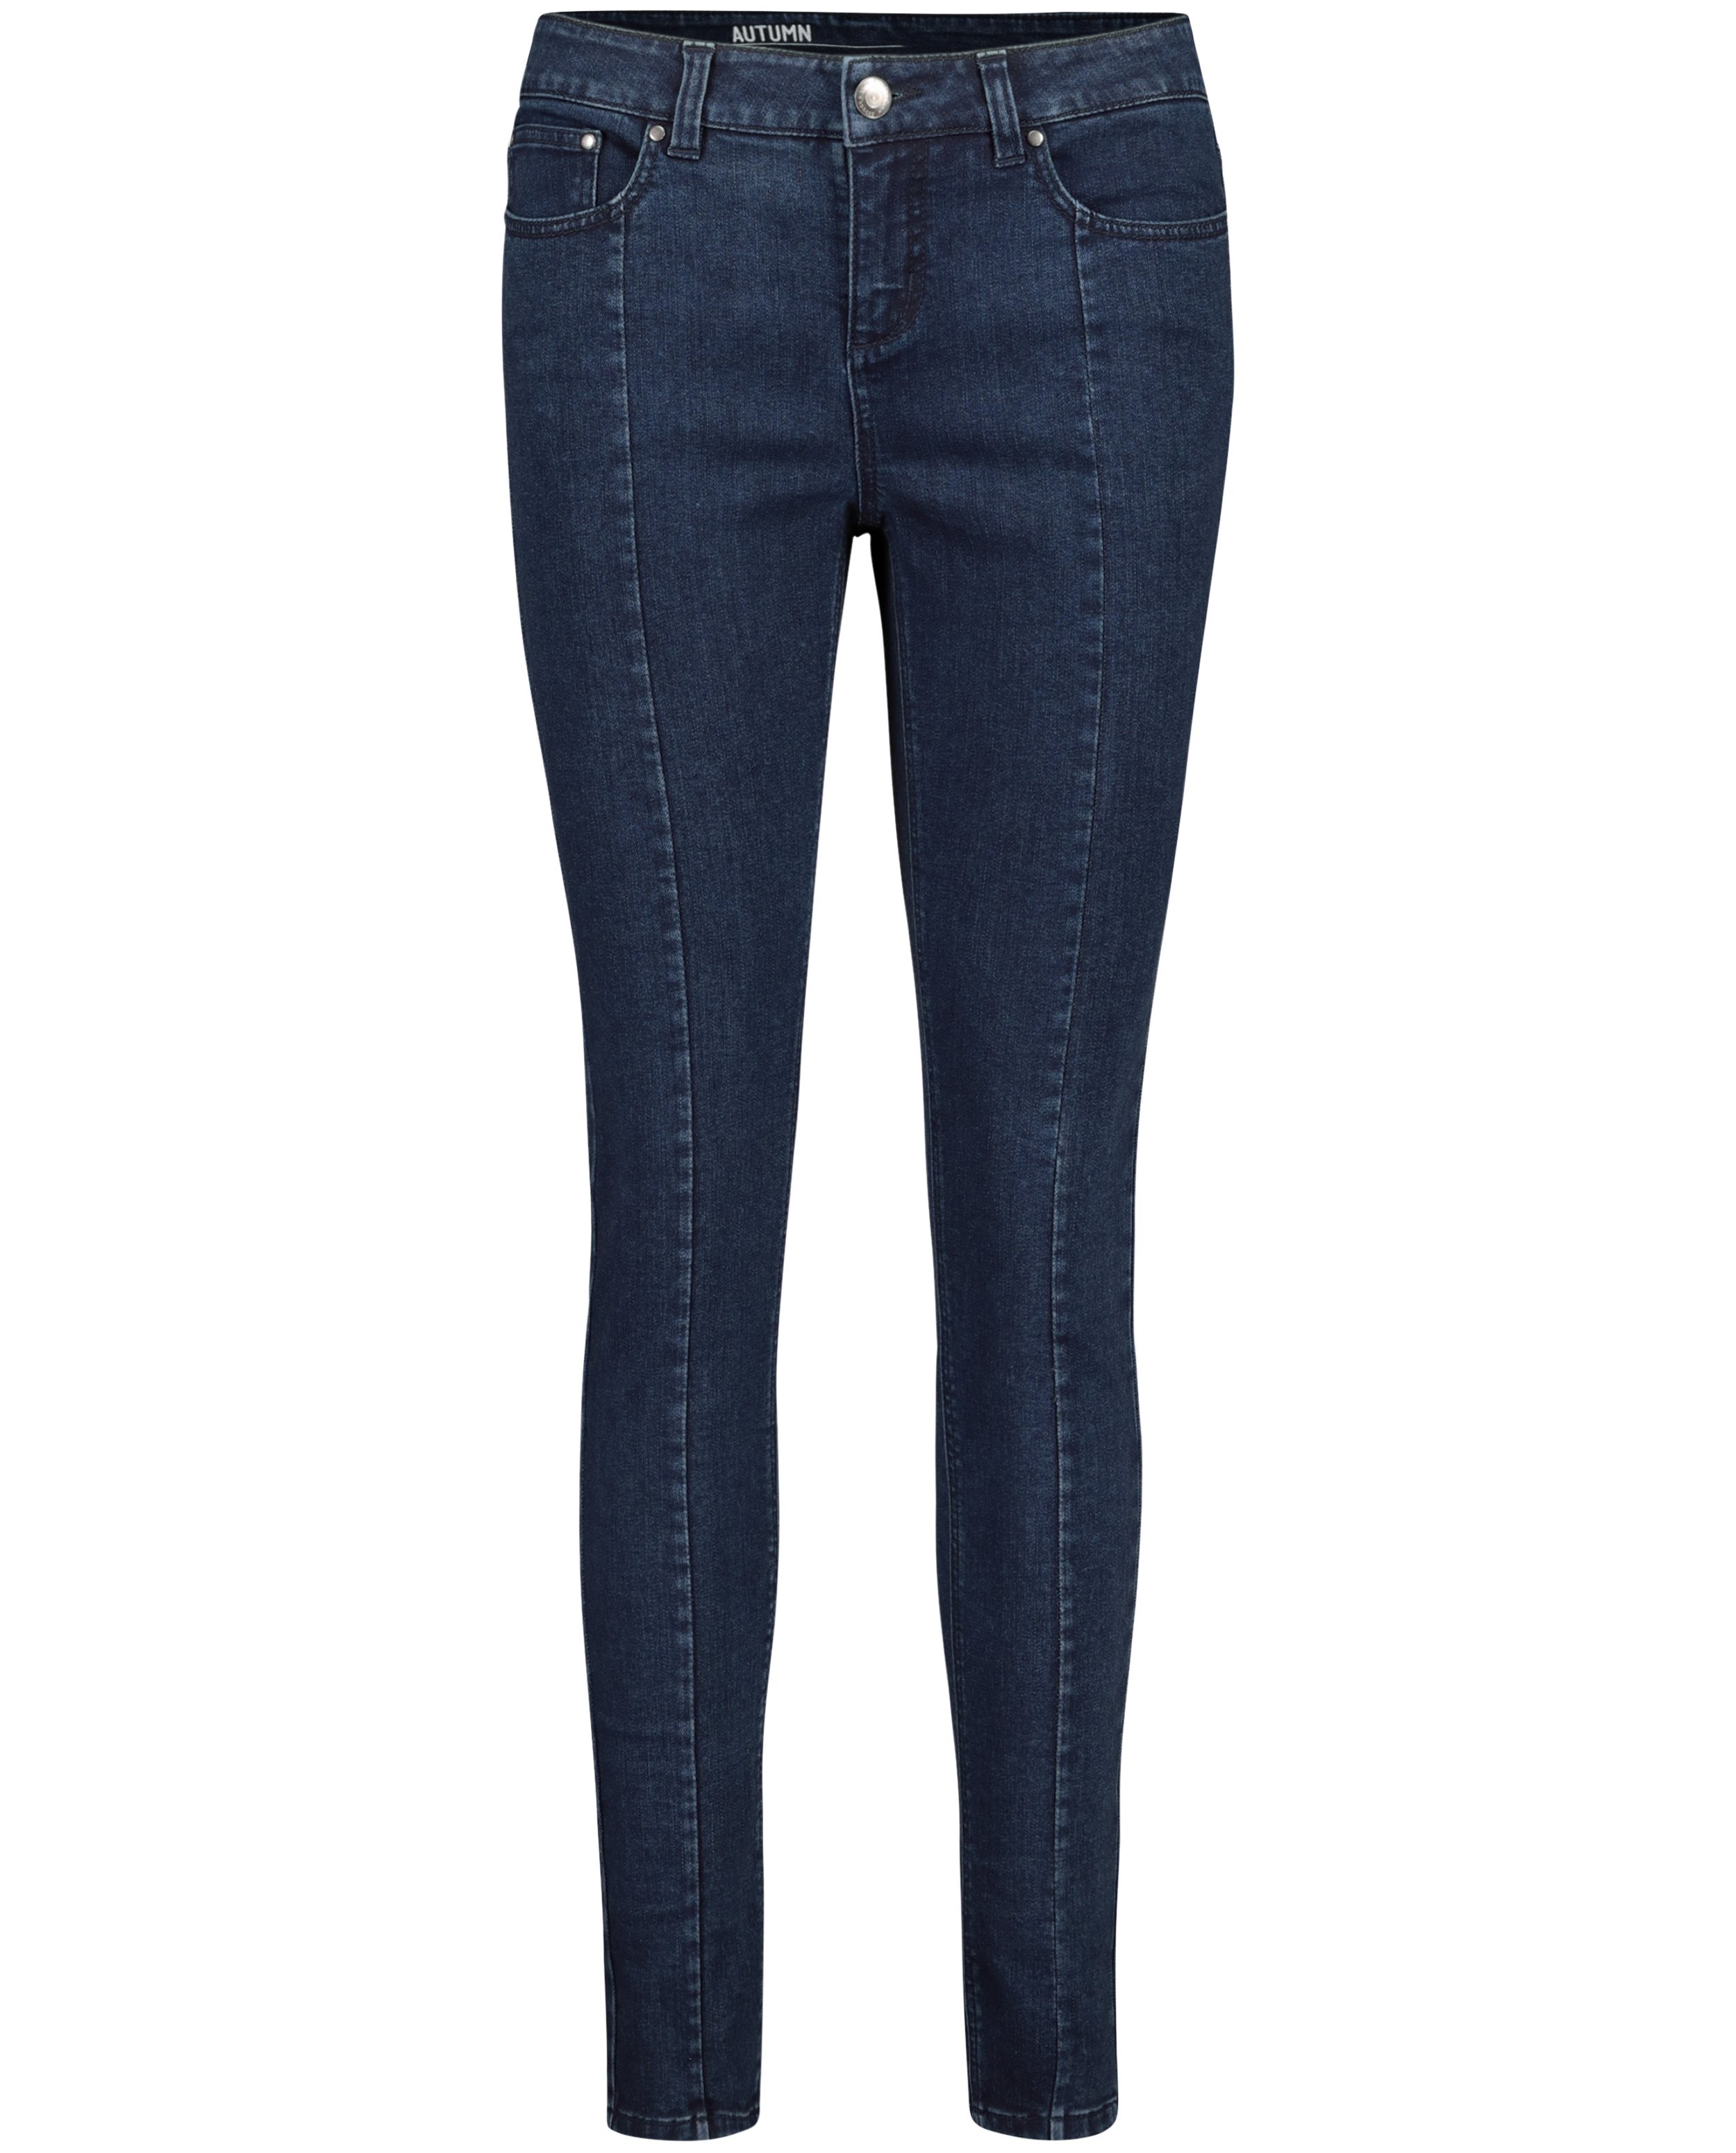 Jeans skinny bleu foncé - avec un peu de stretch - Groggy